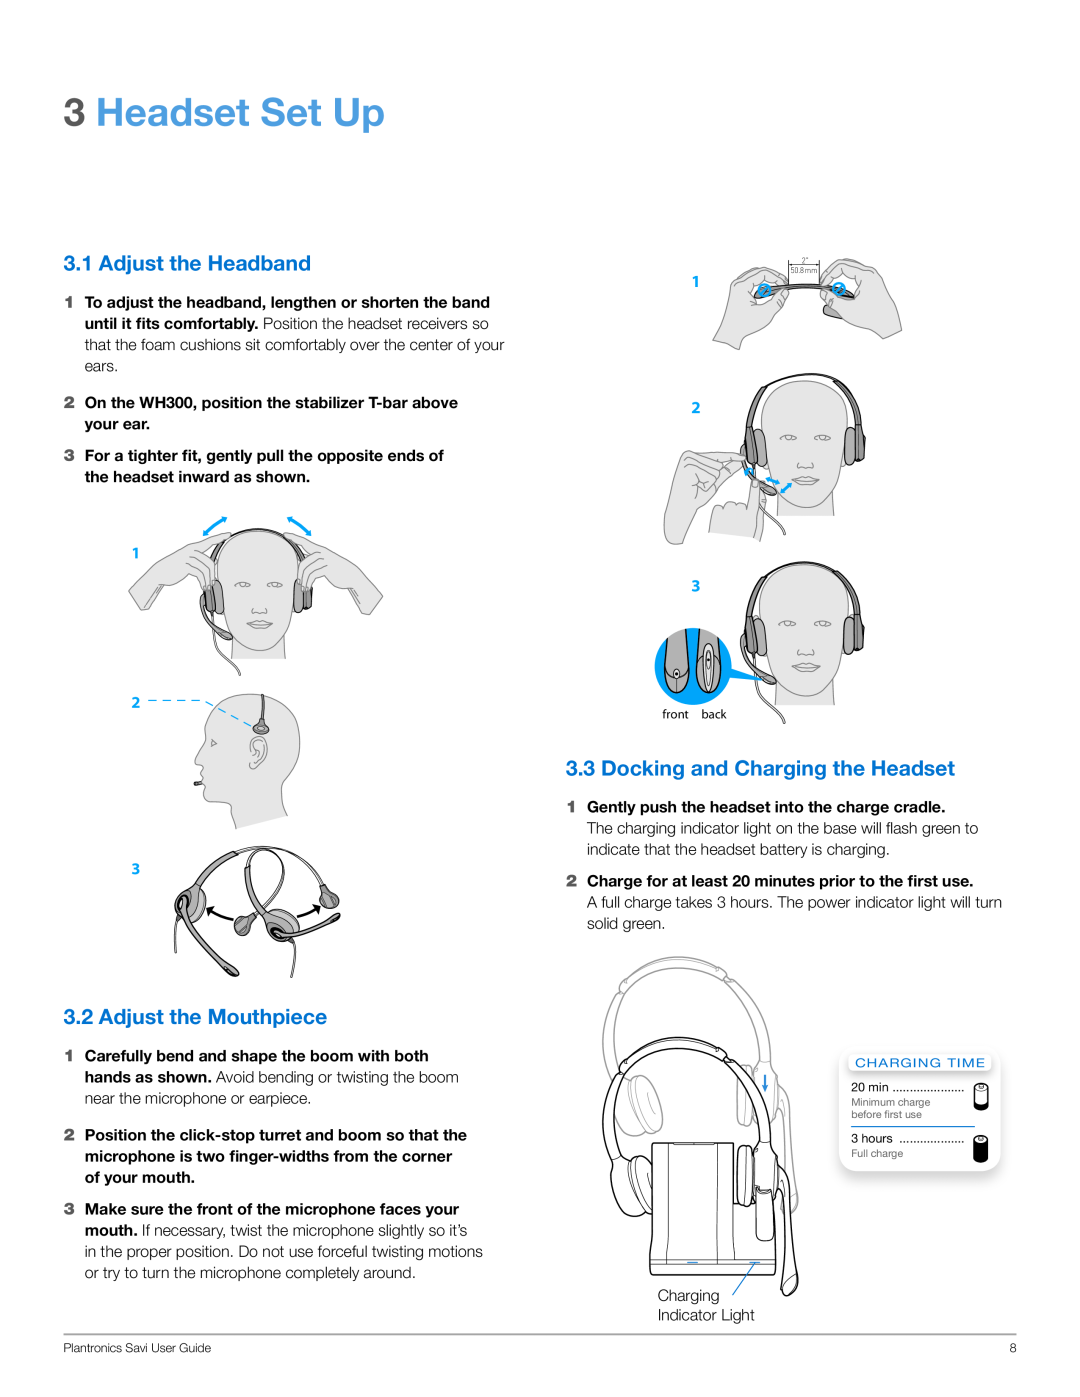 Plantronics WO350 manual Headset Set Up, Adjust the Headband, 3.2Adjust the Mouthpiece, Docking and Charging the Headset 